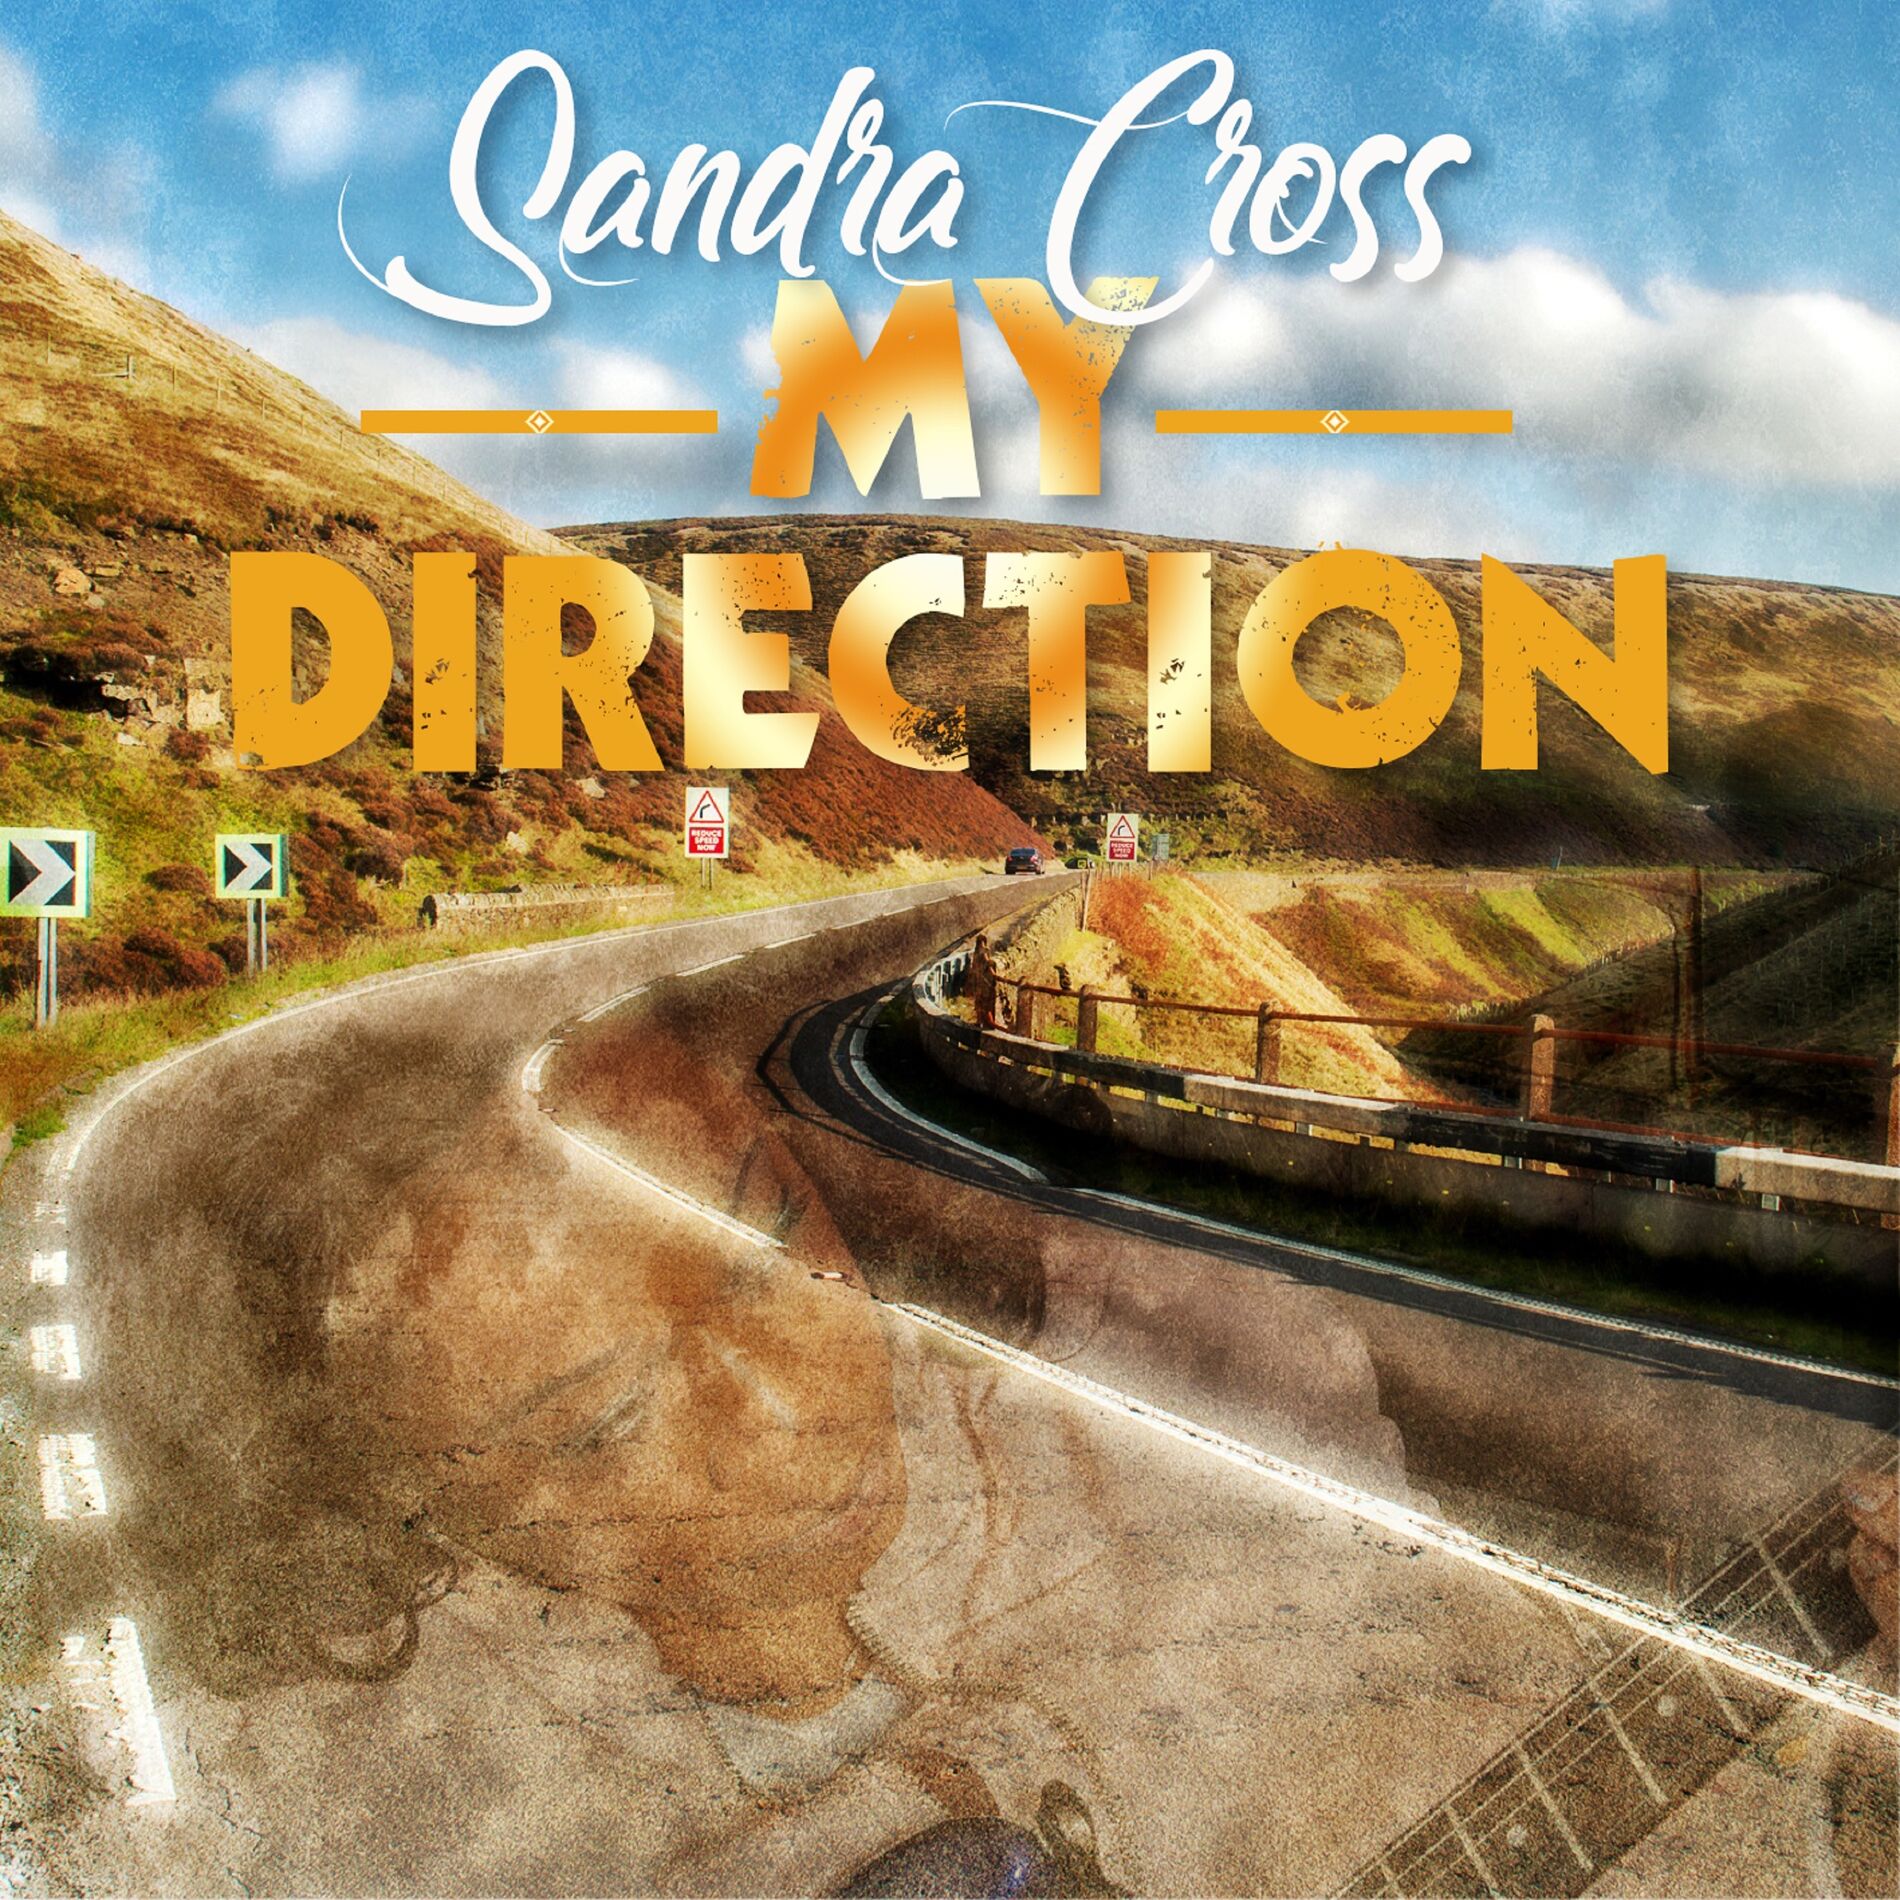 Sandra Cross: albums, songs, playlists | Listen on Deezer